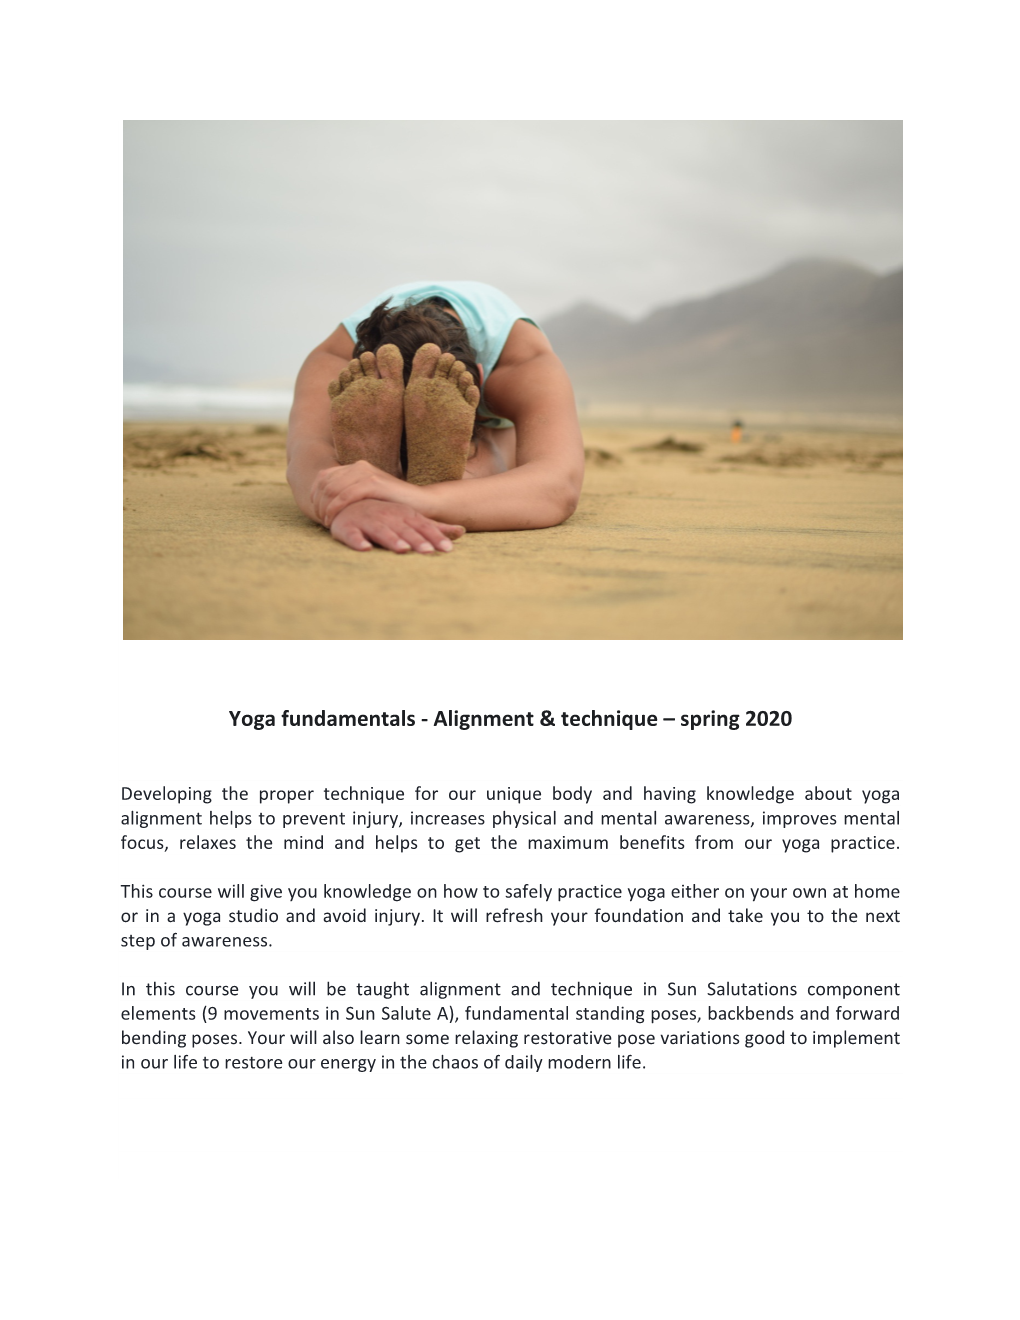 Yoga Fundamentals - Alignment & Technique – Spring 2020